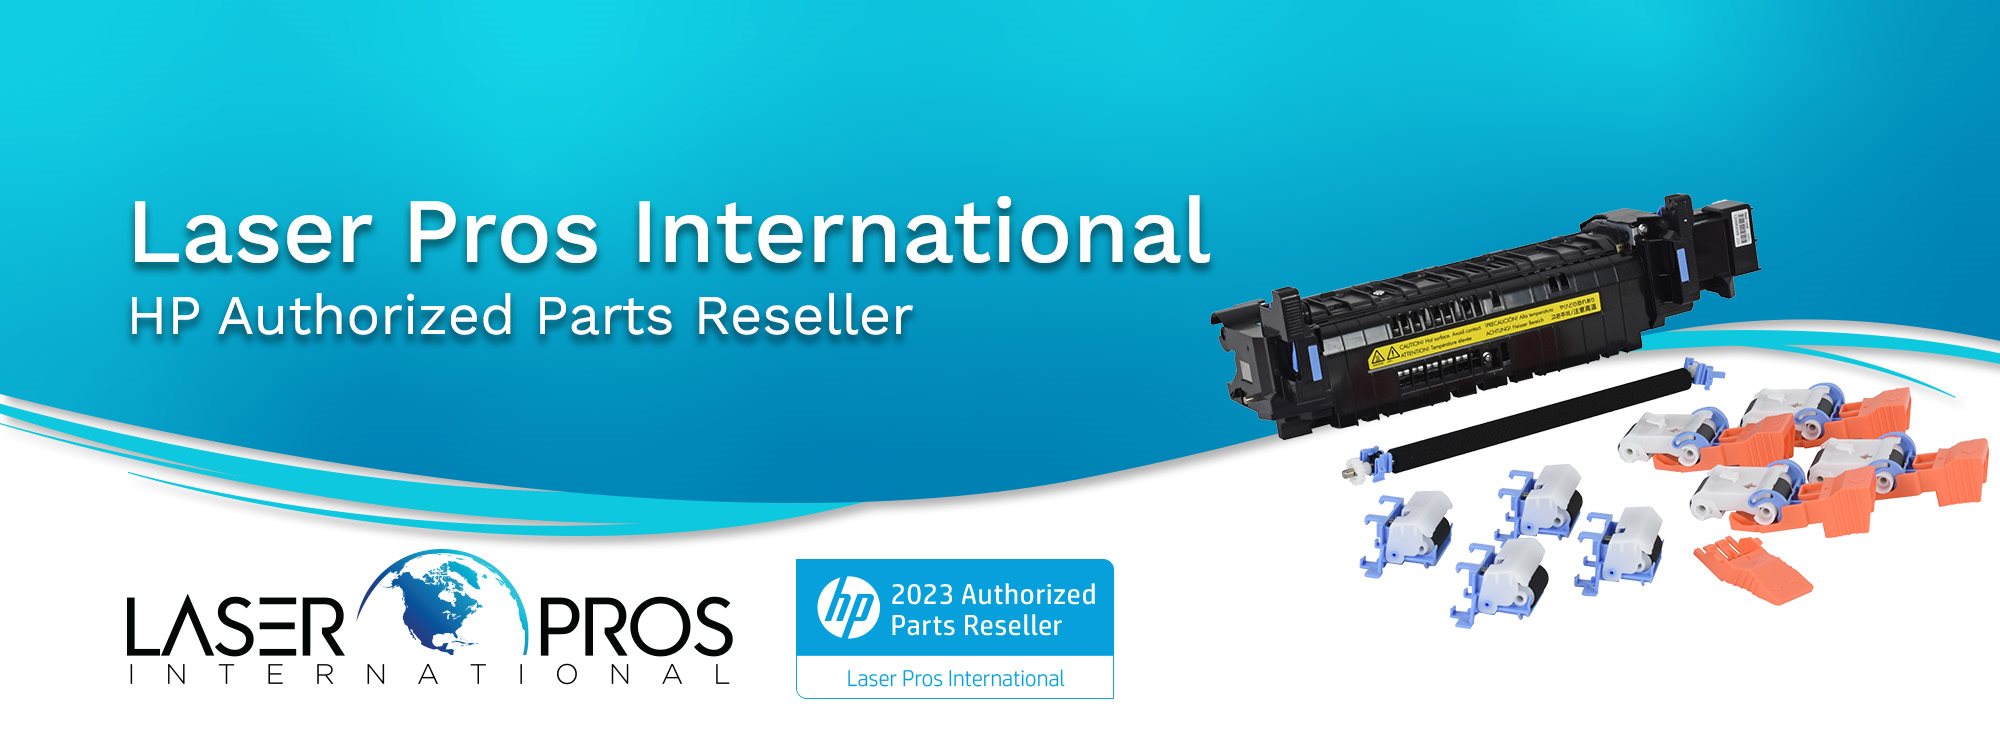 Laser Pros International 2023 HP APR